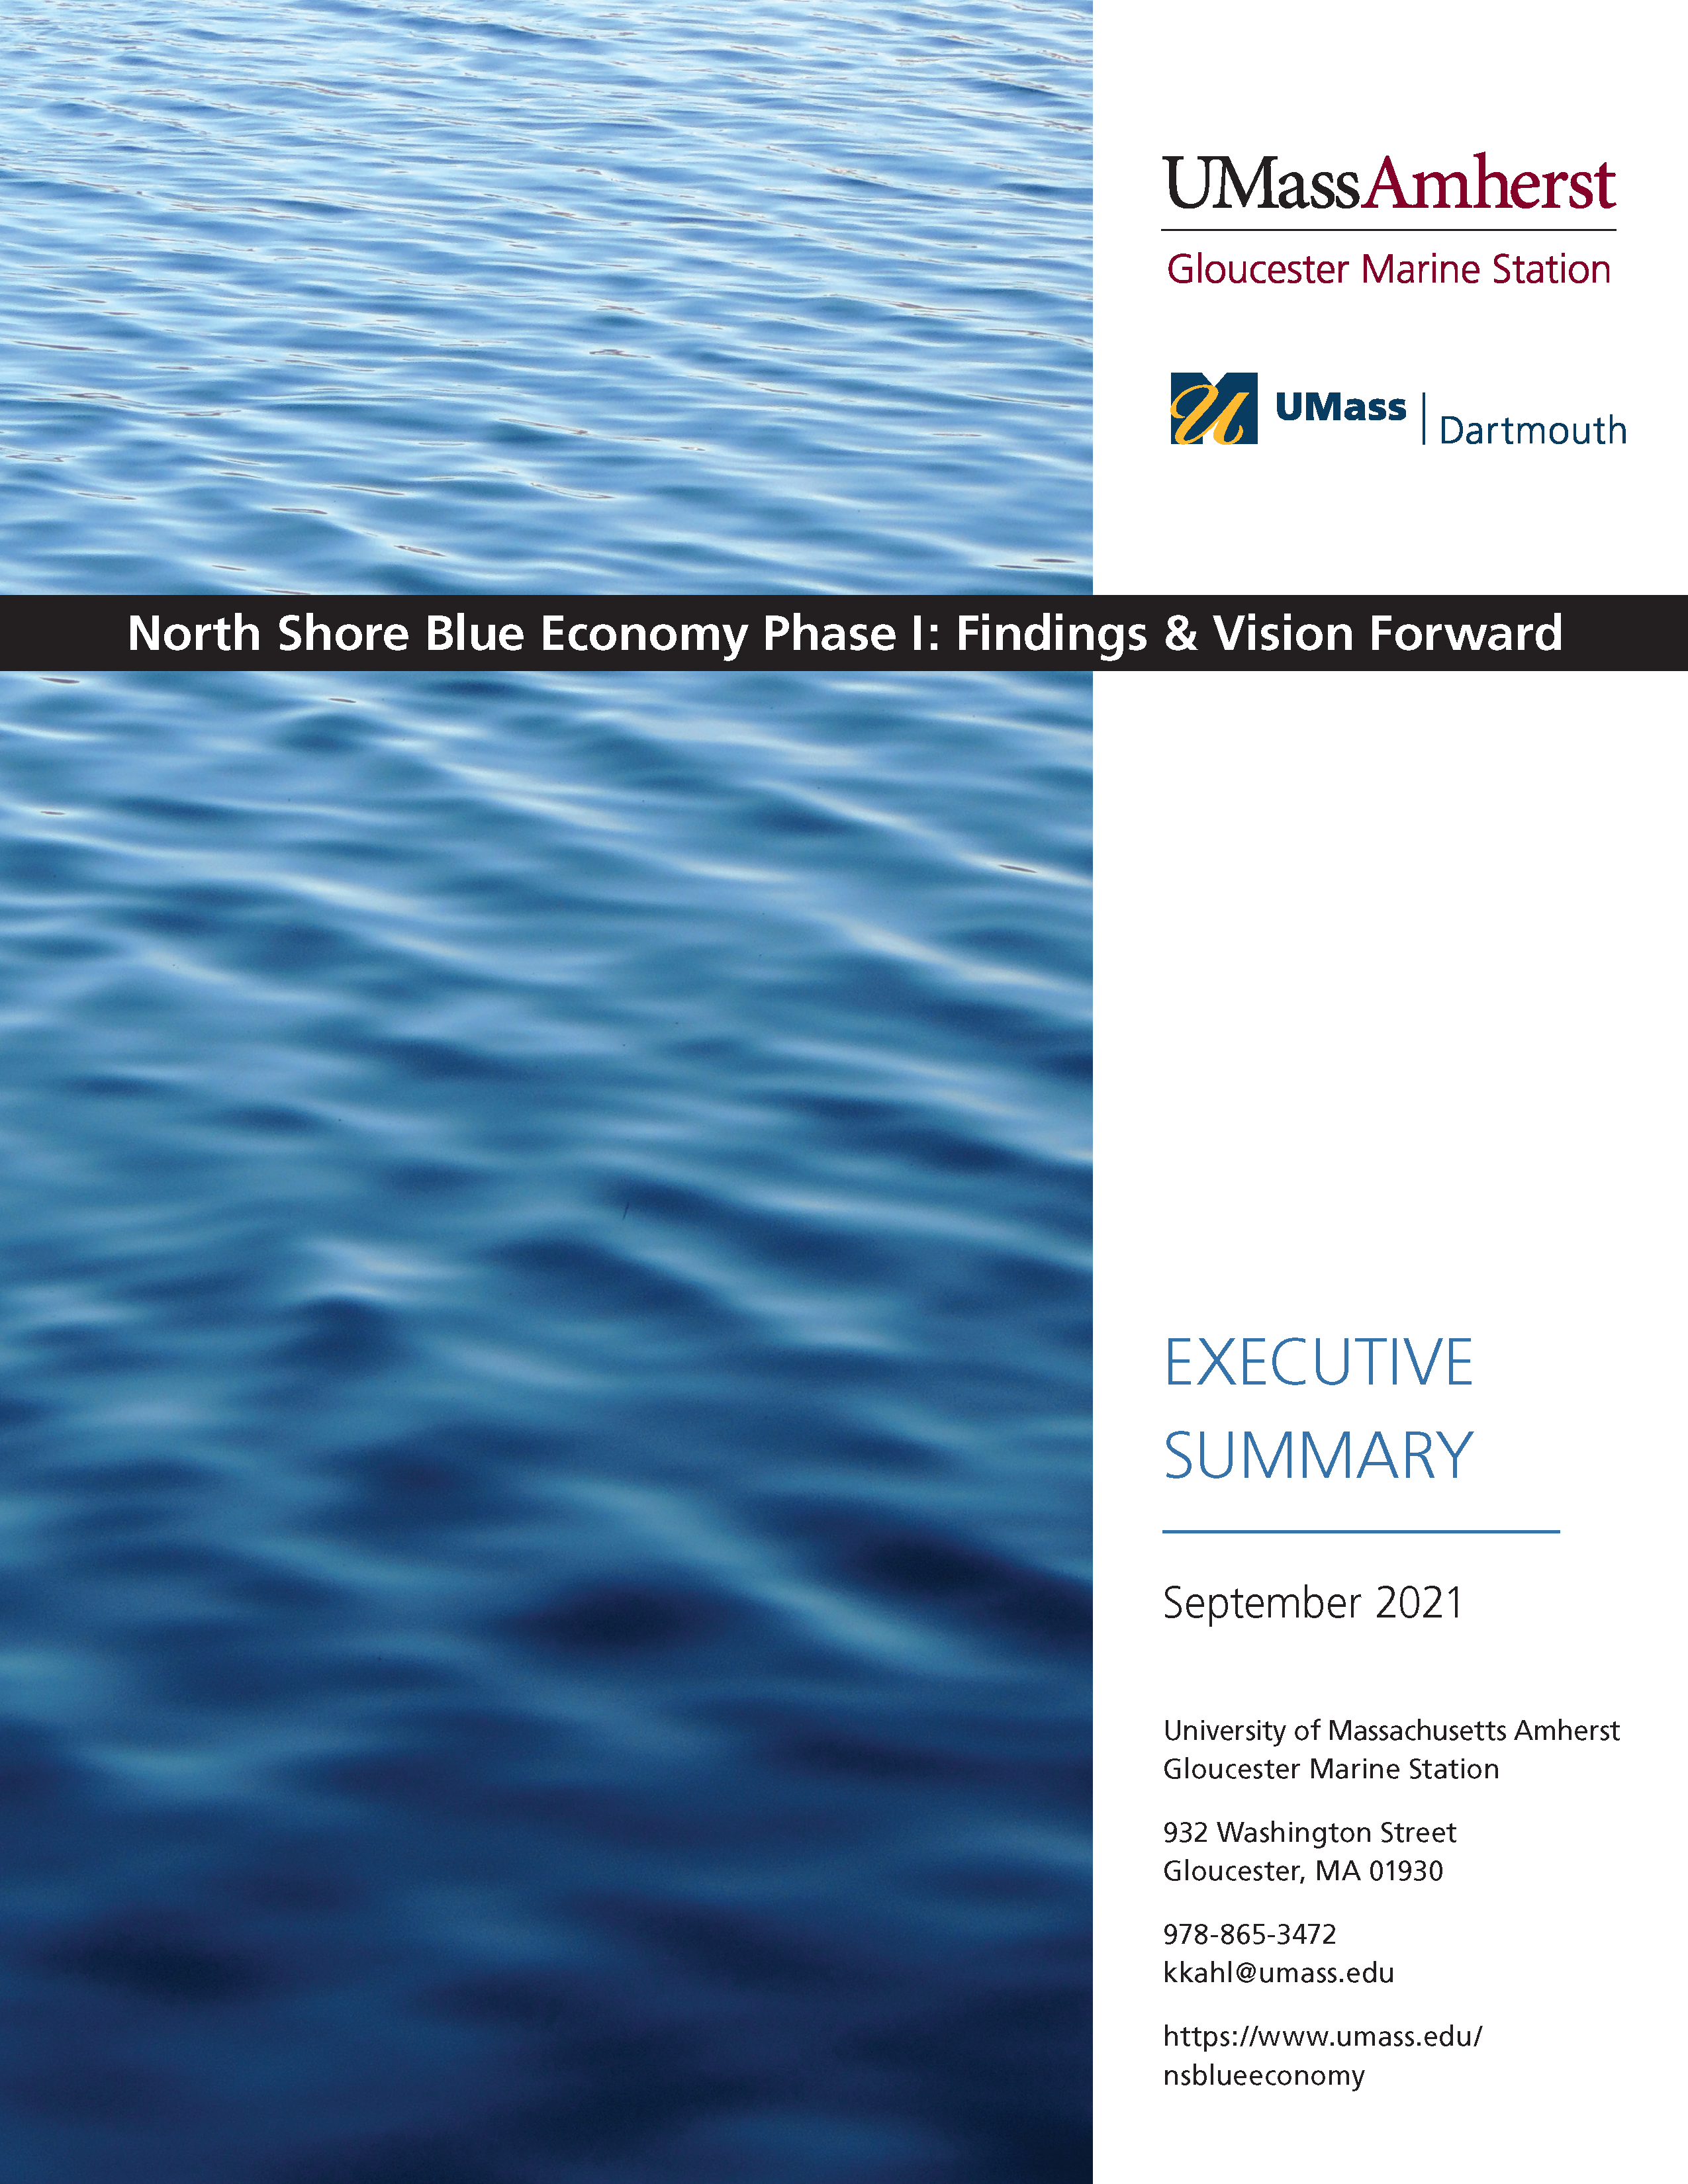 North Shore Blue Economy fact sheet